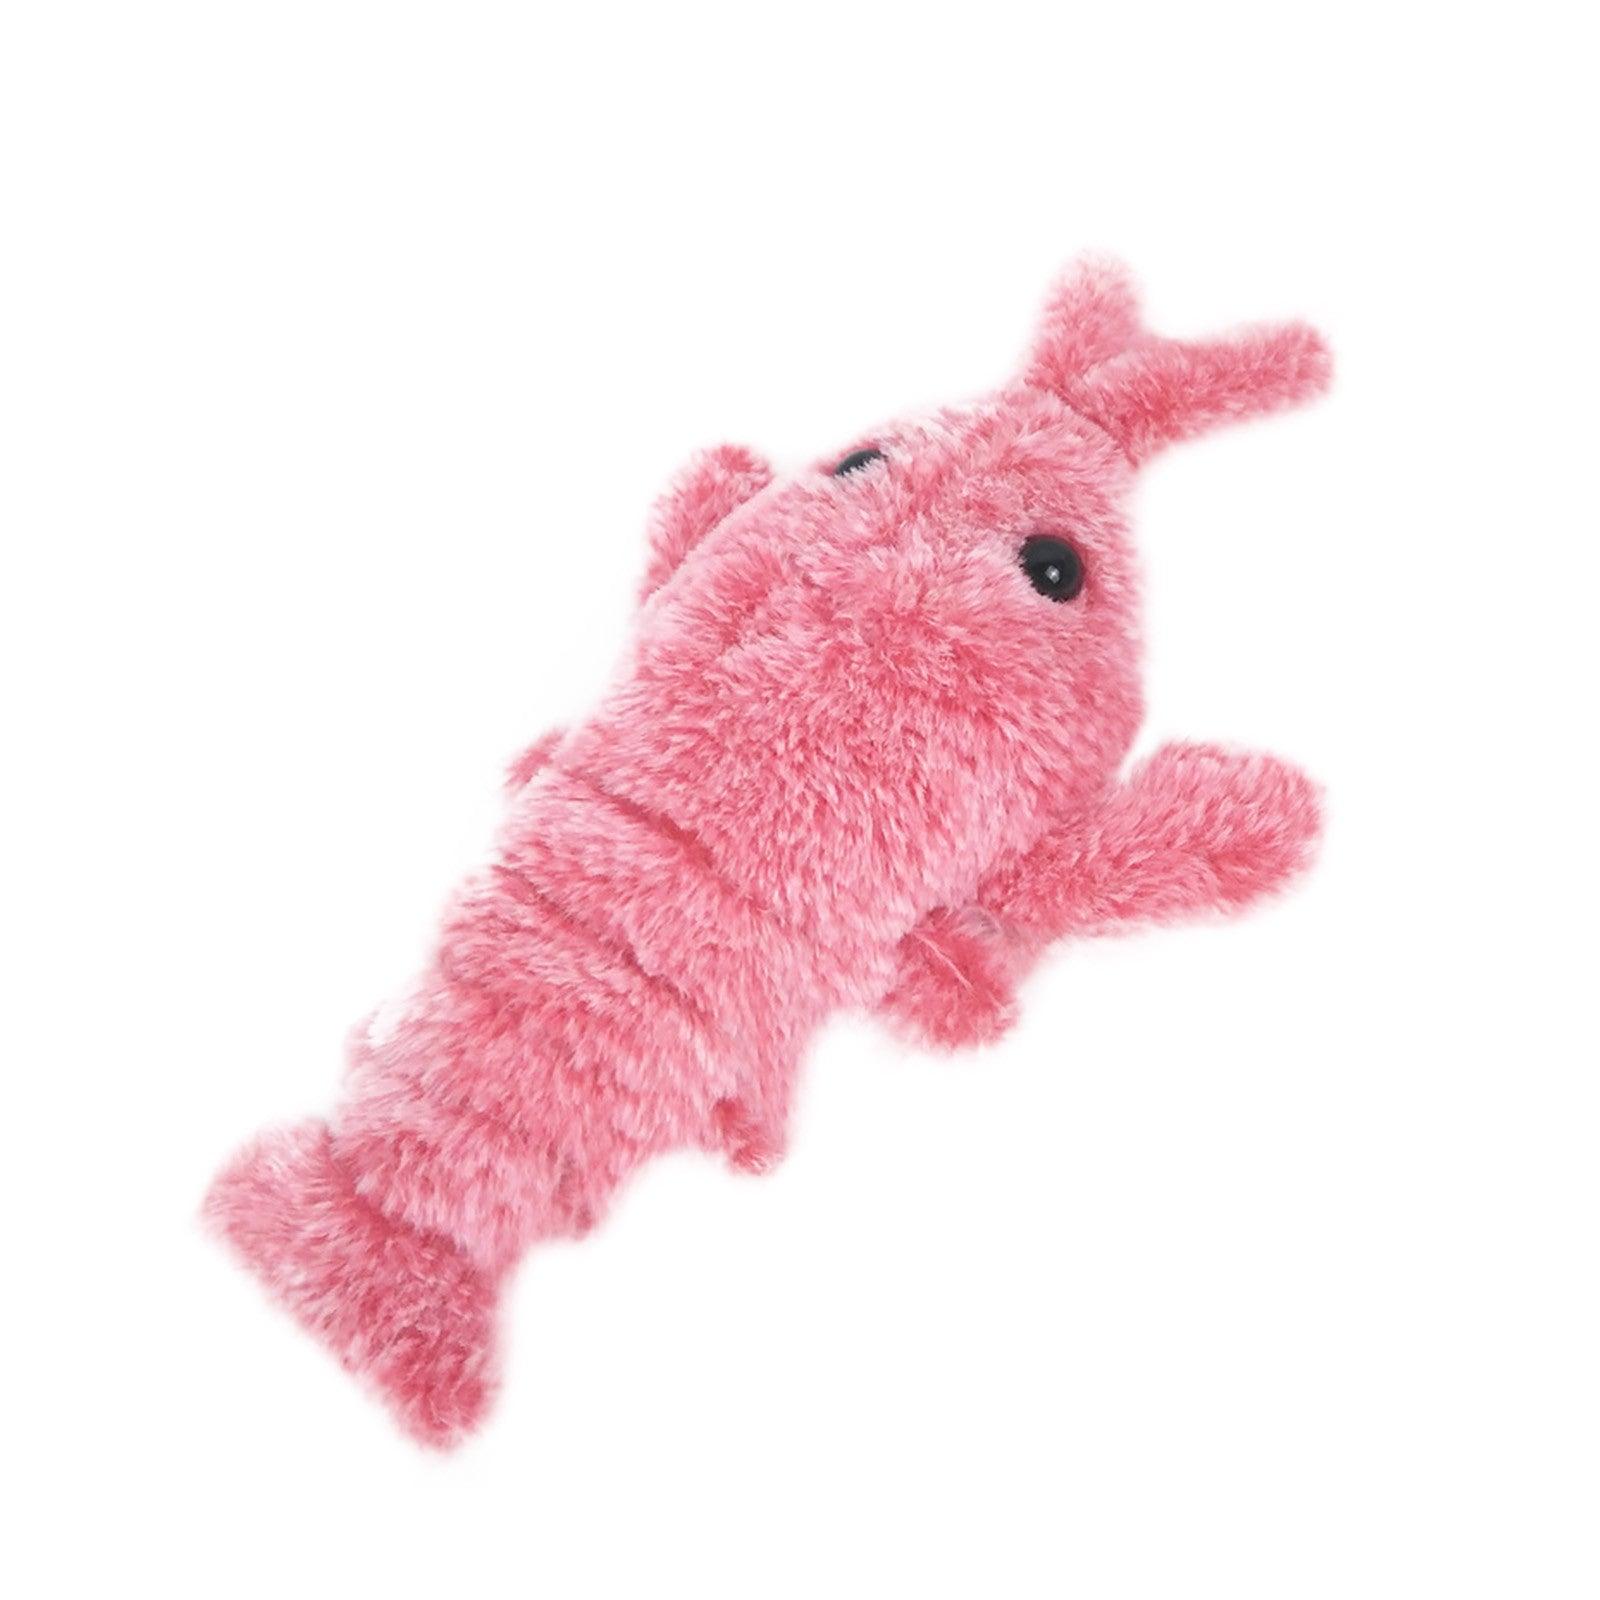 Electric Jumping Shrimp Cat Toy - Wendy Pet Shop 